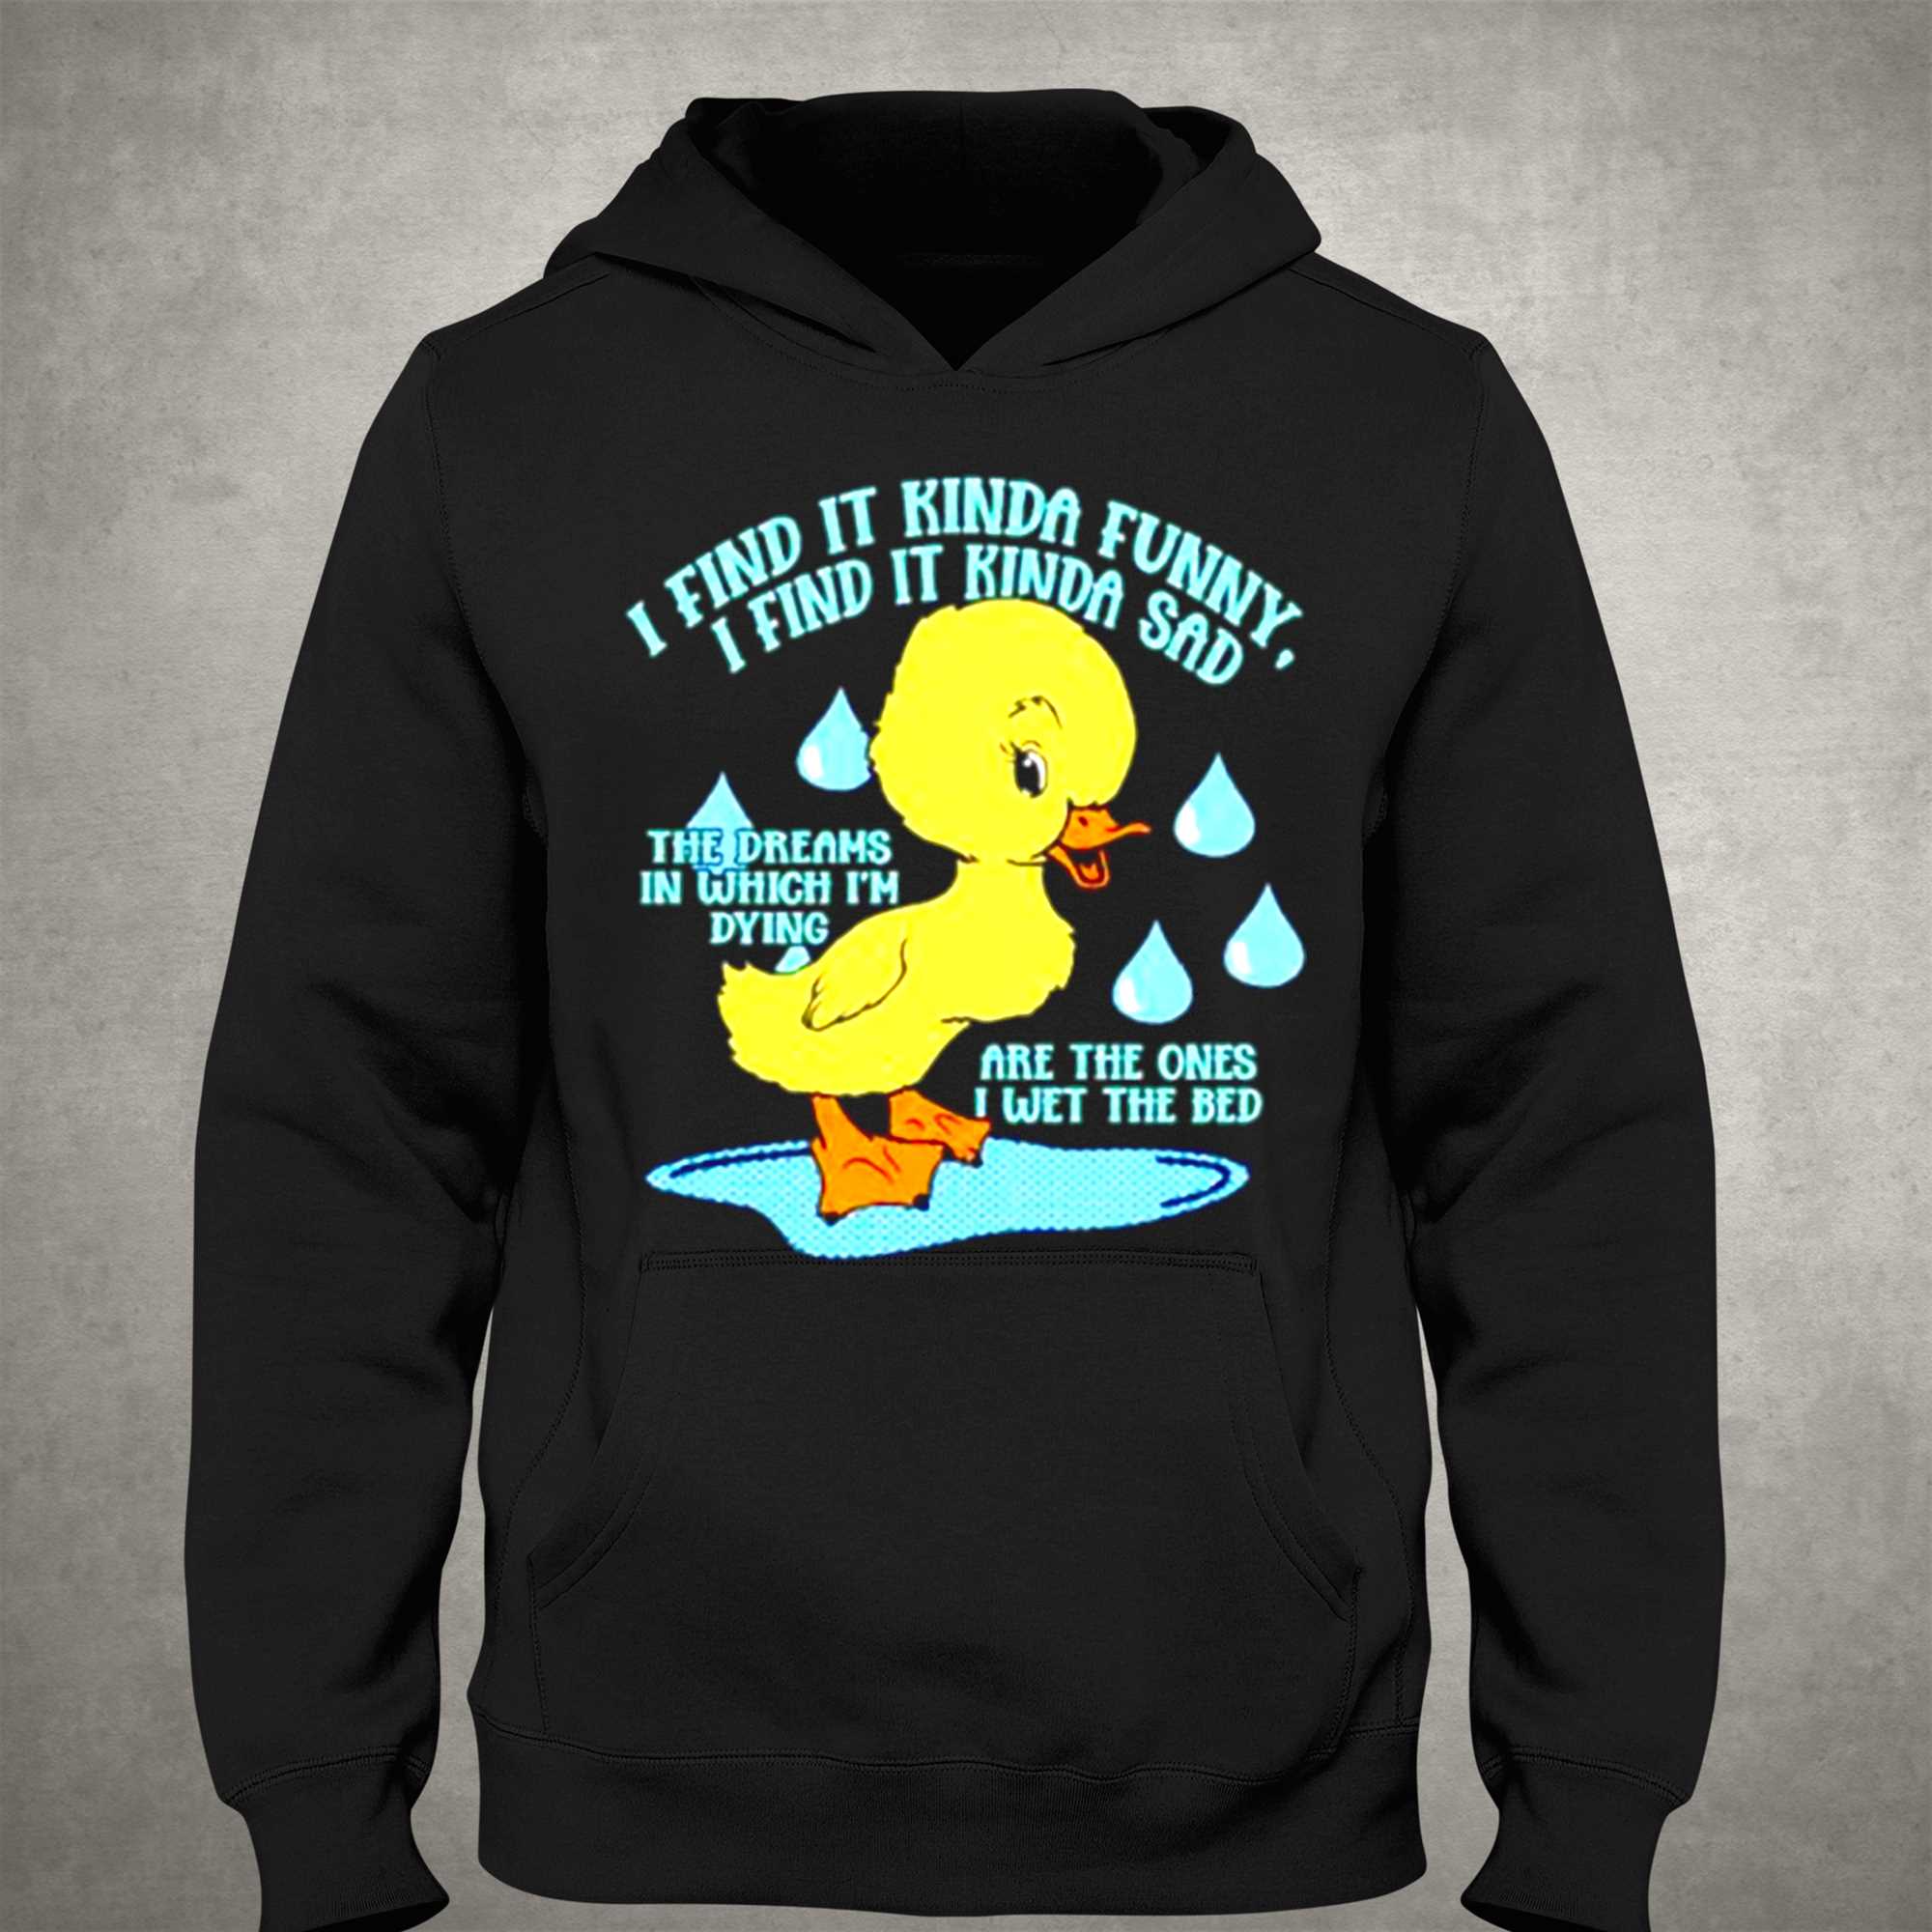 I Find It Kinda Funny I Find It Kinda Sad Ducko T-shirt - Shibtee Clothing